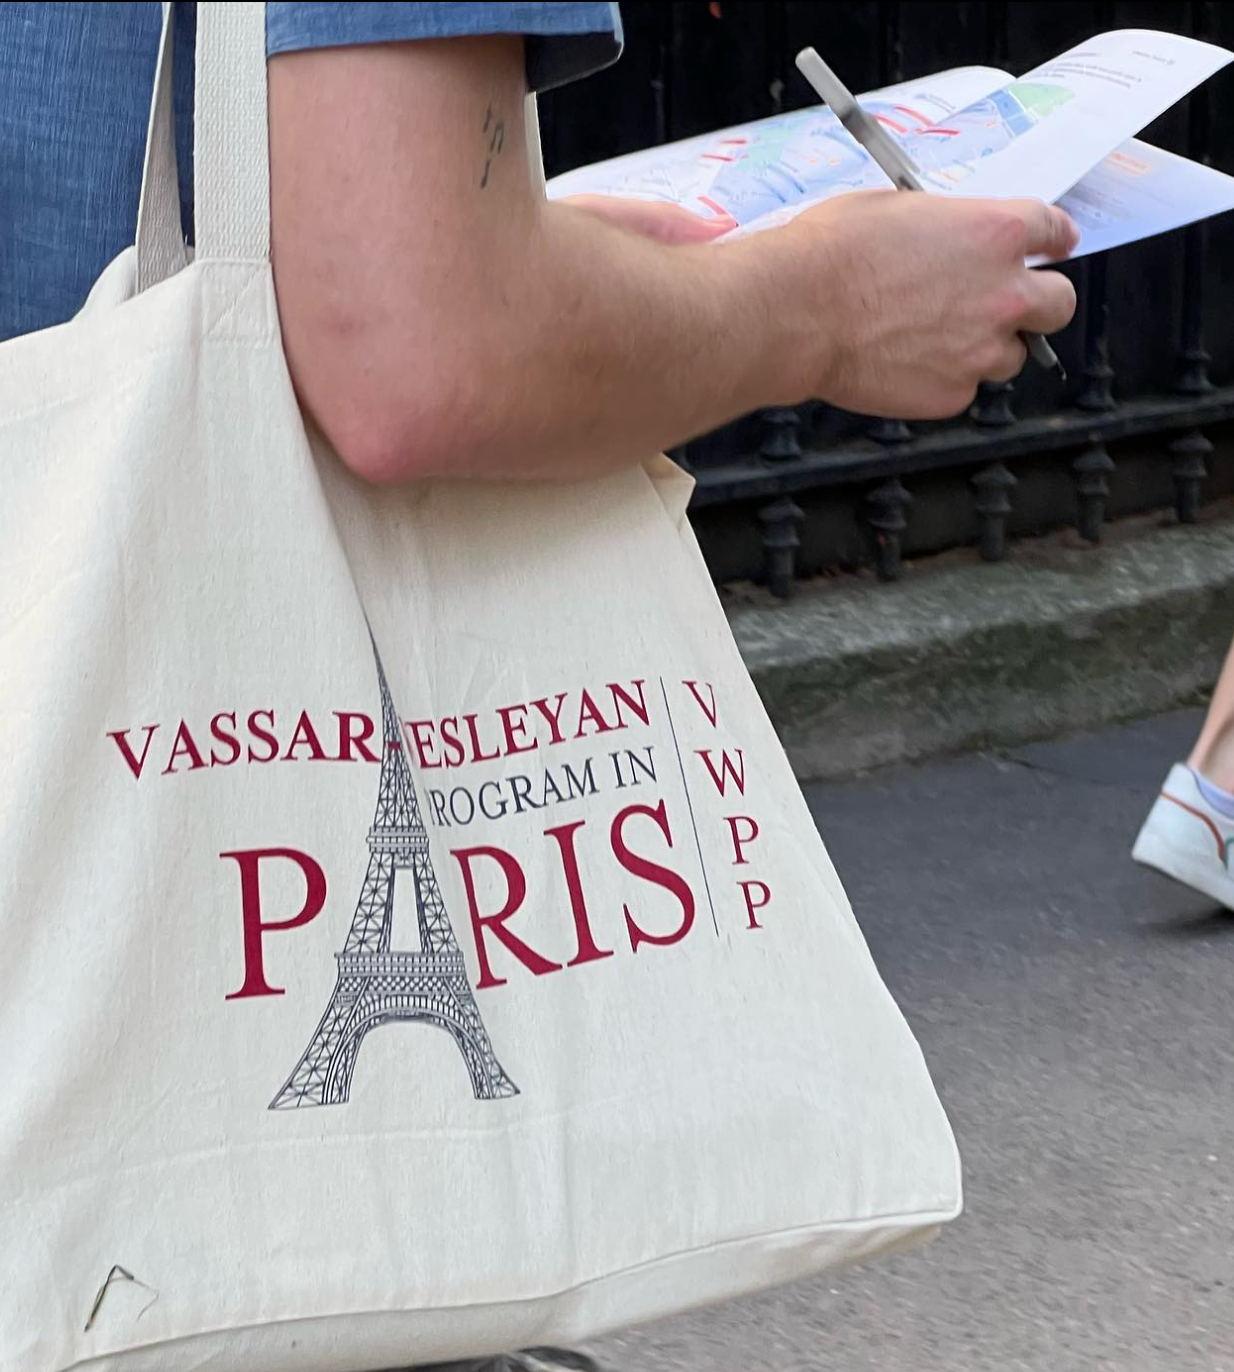 Vassar Wesleyan Program in Paris